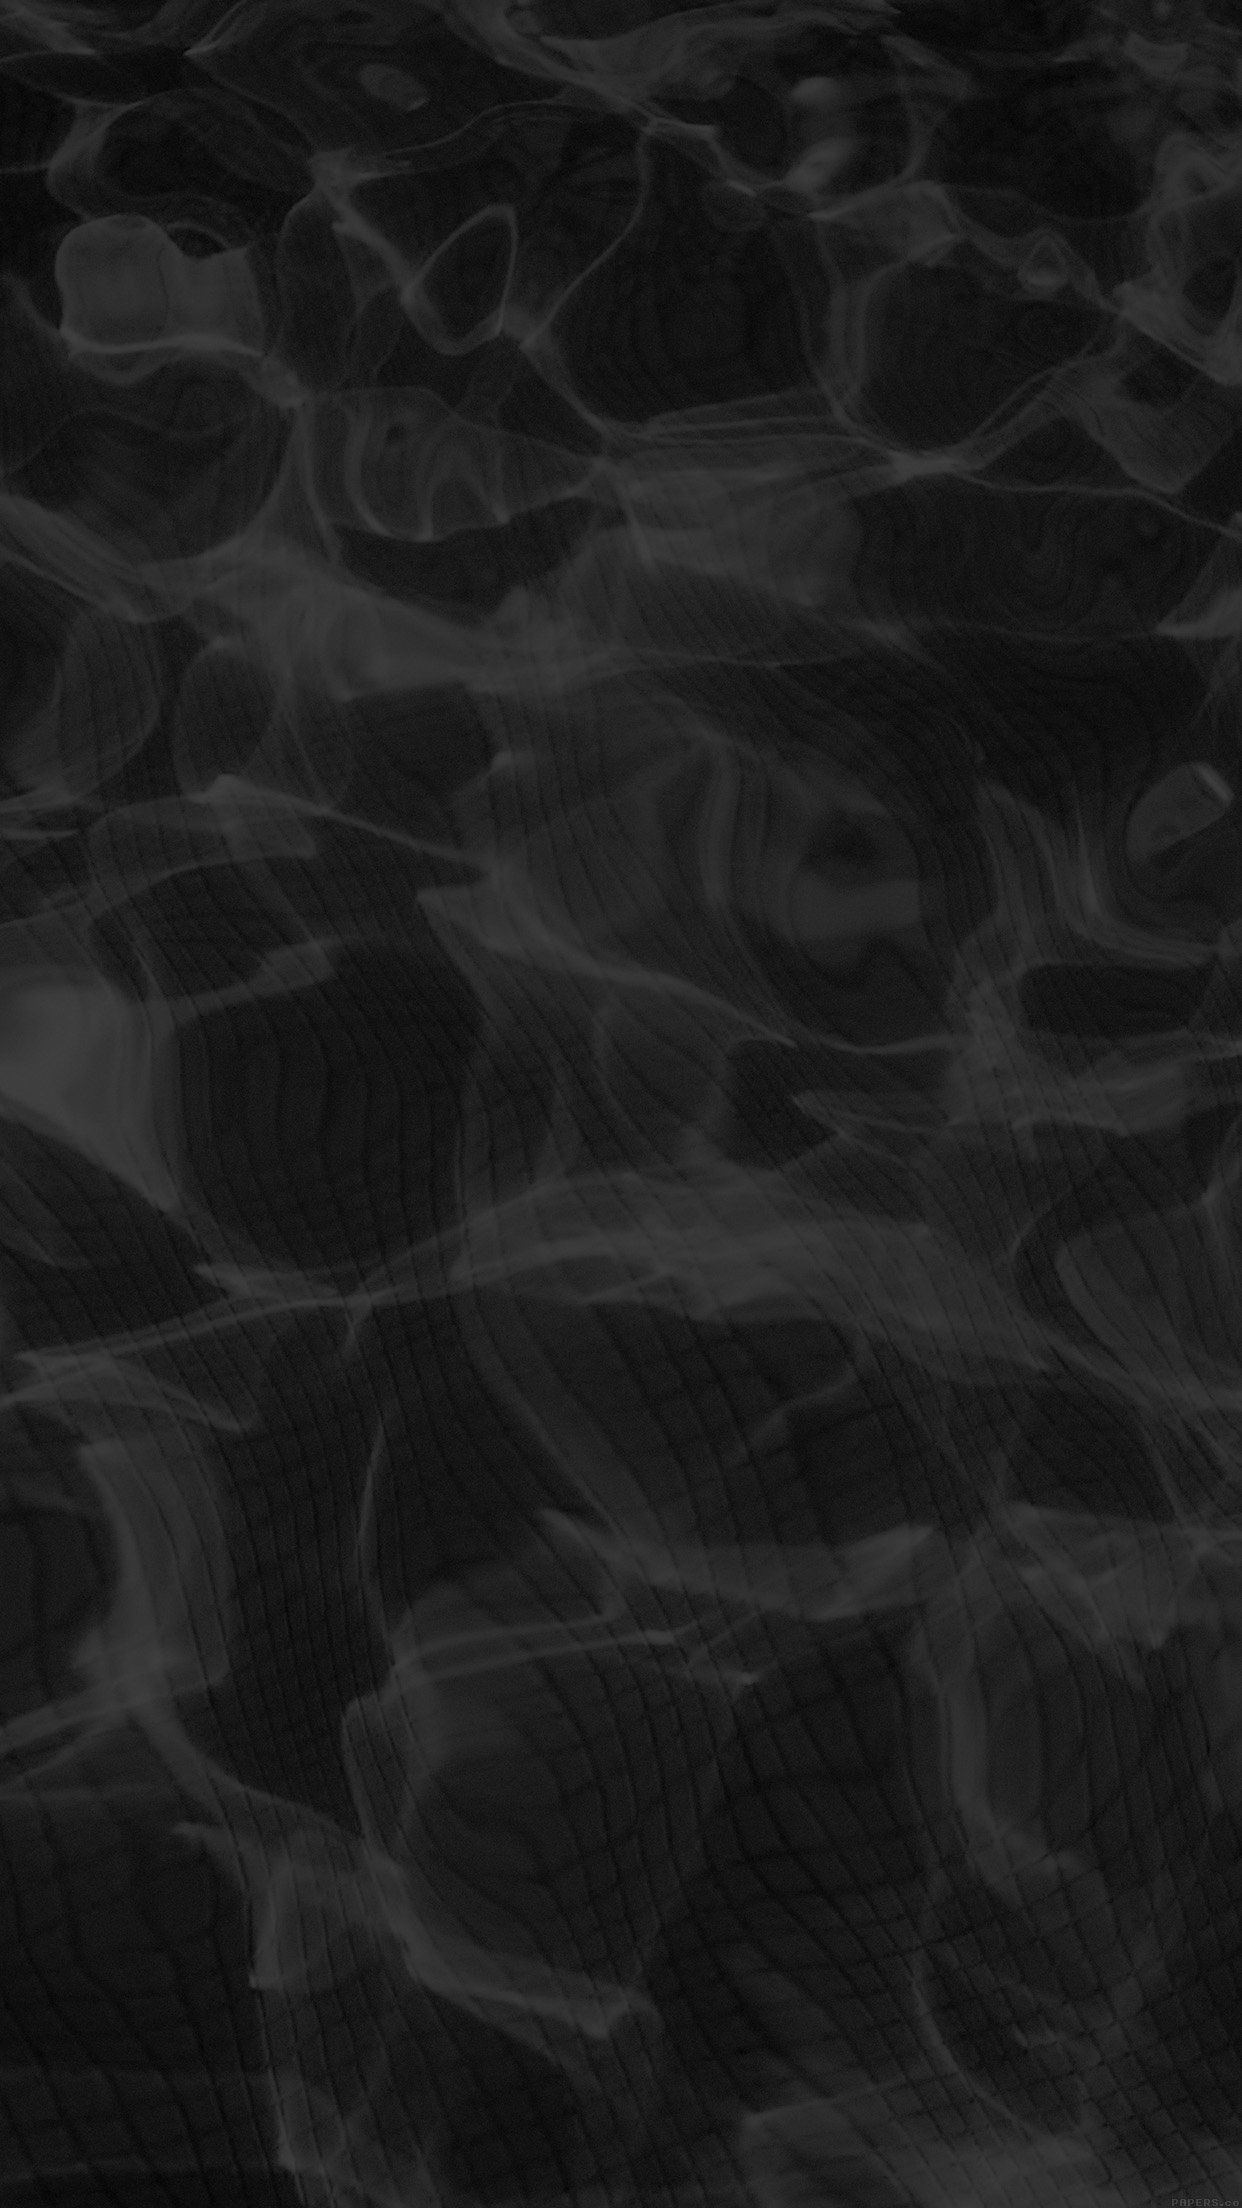 Water Swim Pool Dark Nature Patterns Android wallpaper